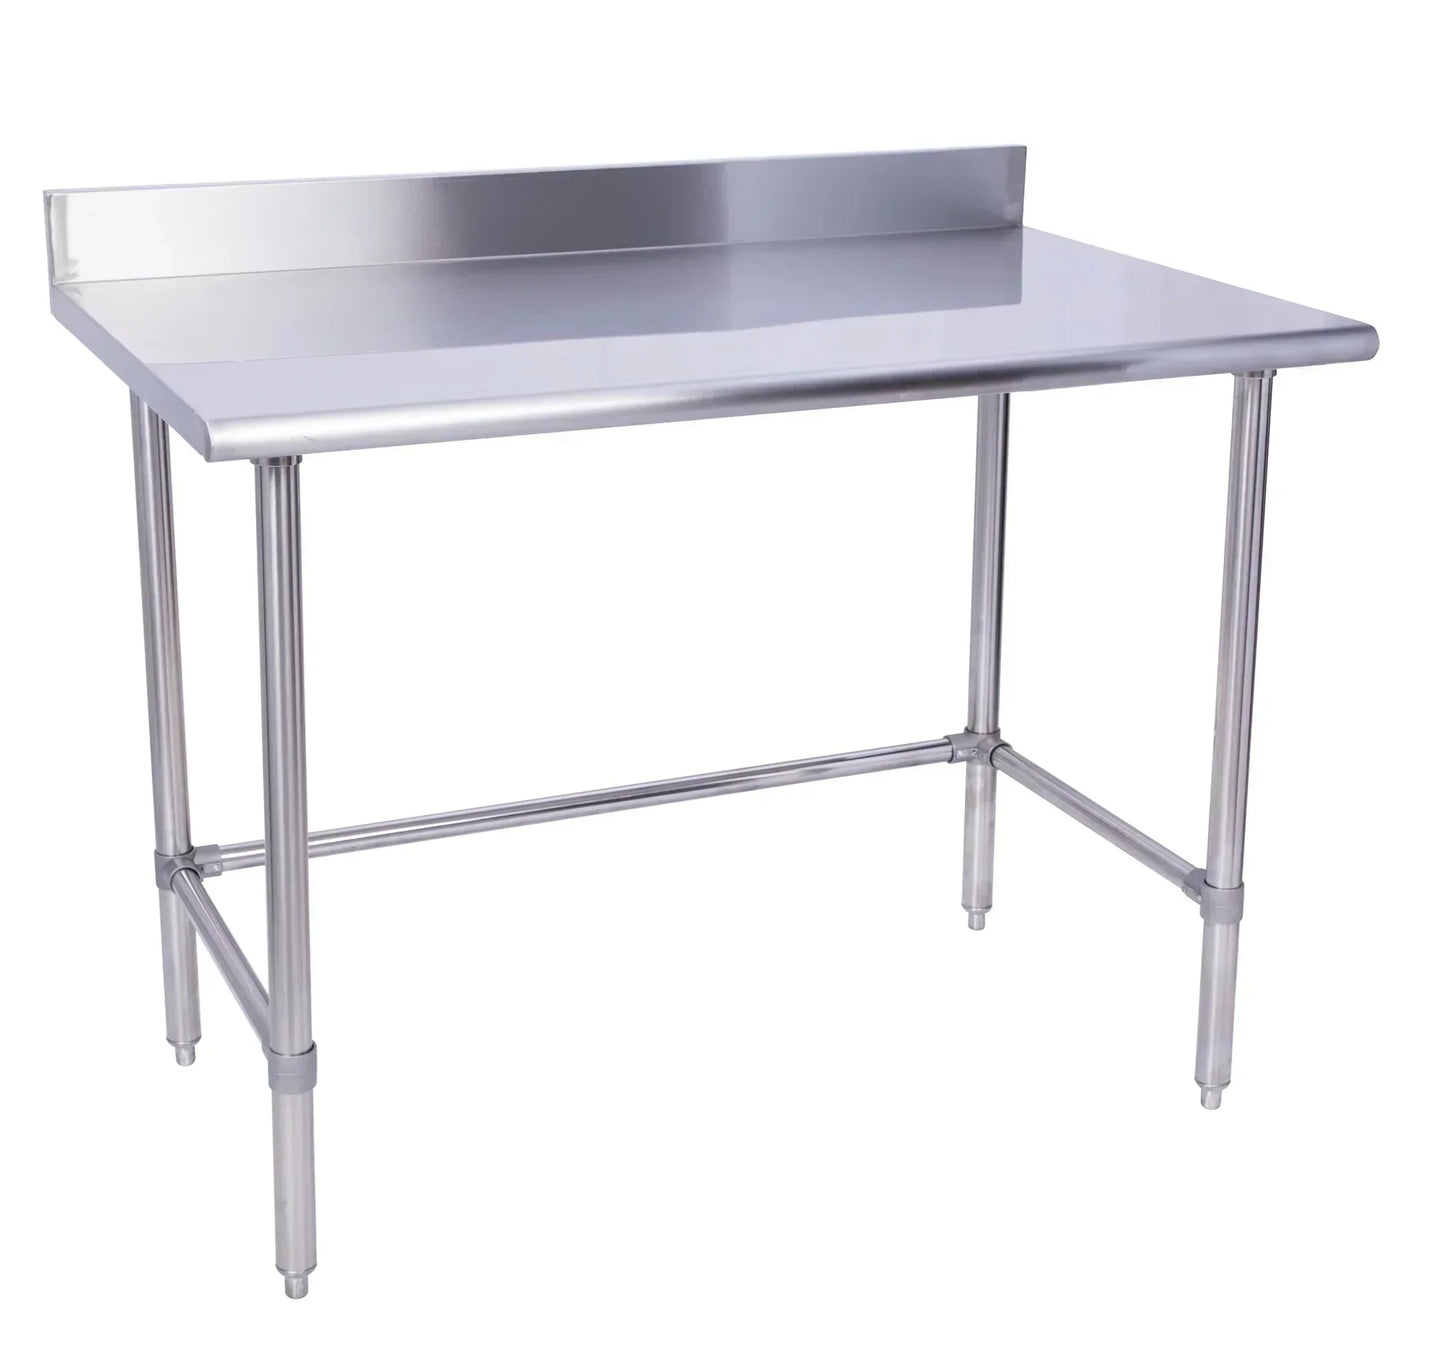 KCS WSCB-2460-B 24" x 60" Stainless Steel Work Table With Cross Bar & 4" Backsplash